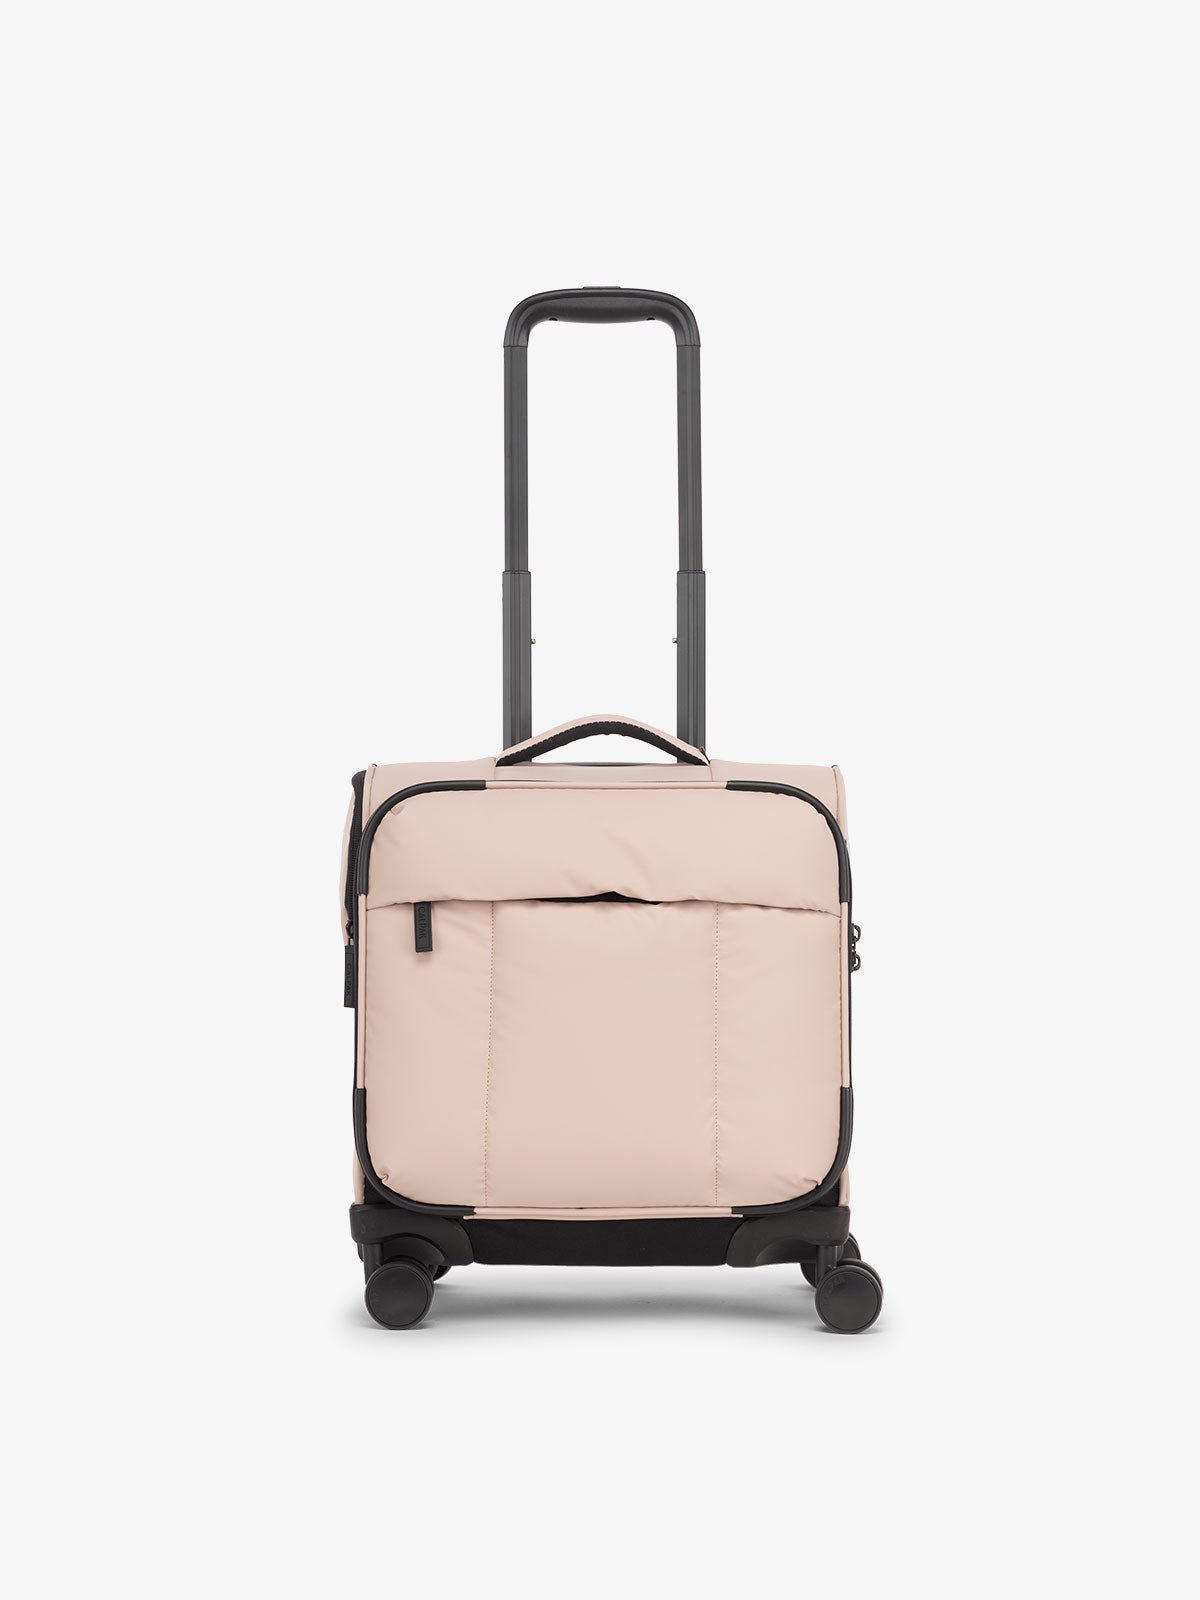 CALPAK Luka mini soft carry-on luggage in rose quartz